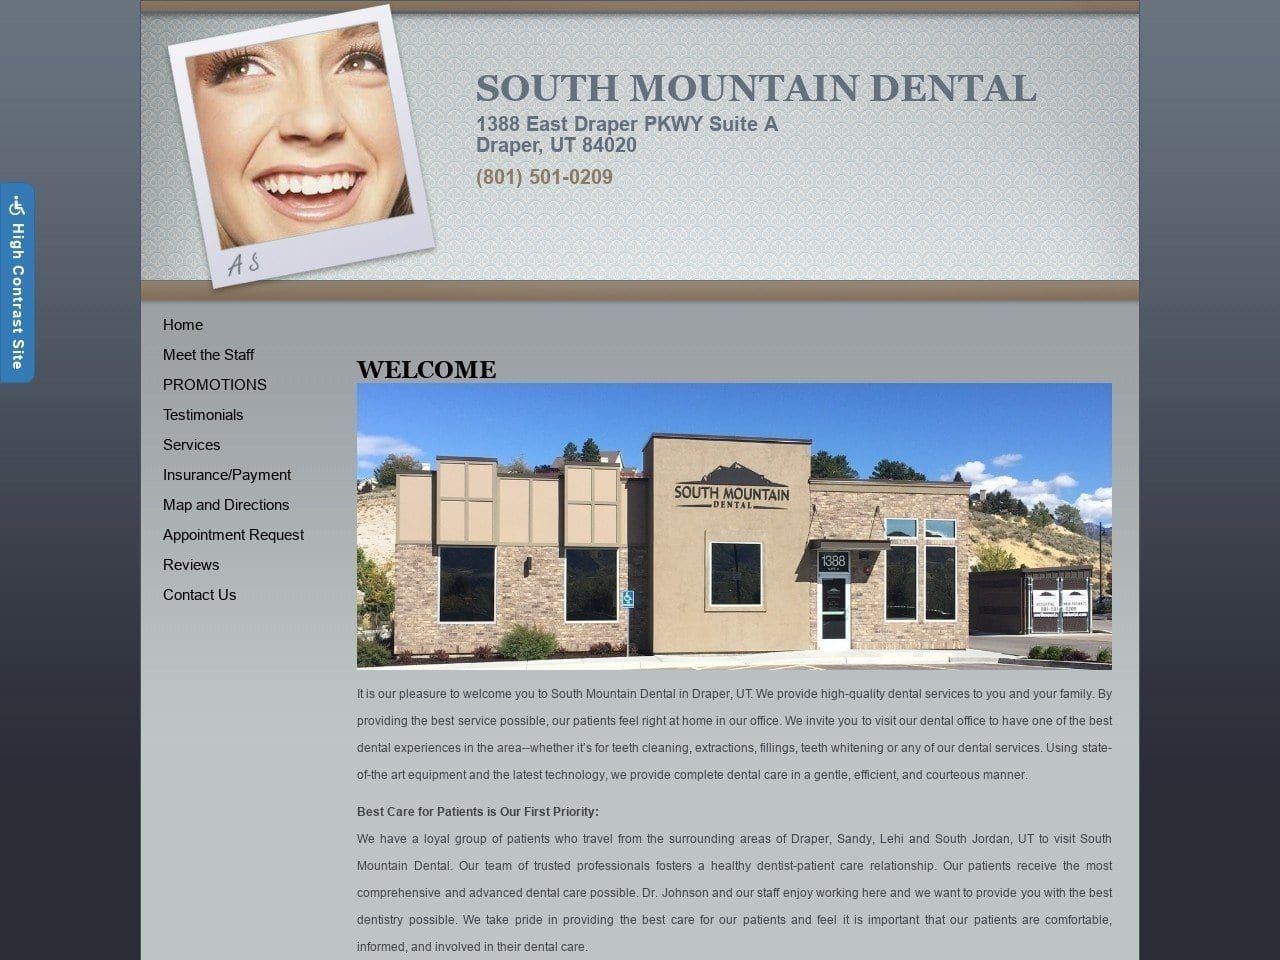 South Mountain Dental Website Screenshot from southmountaindental.com